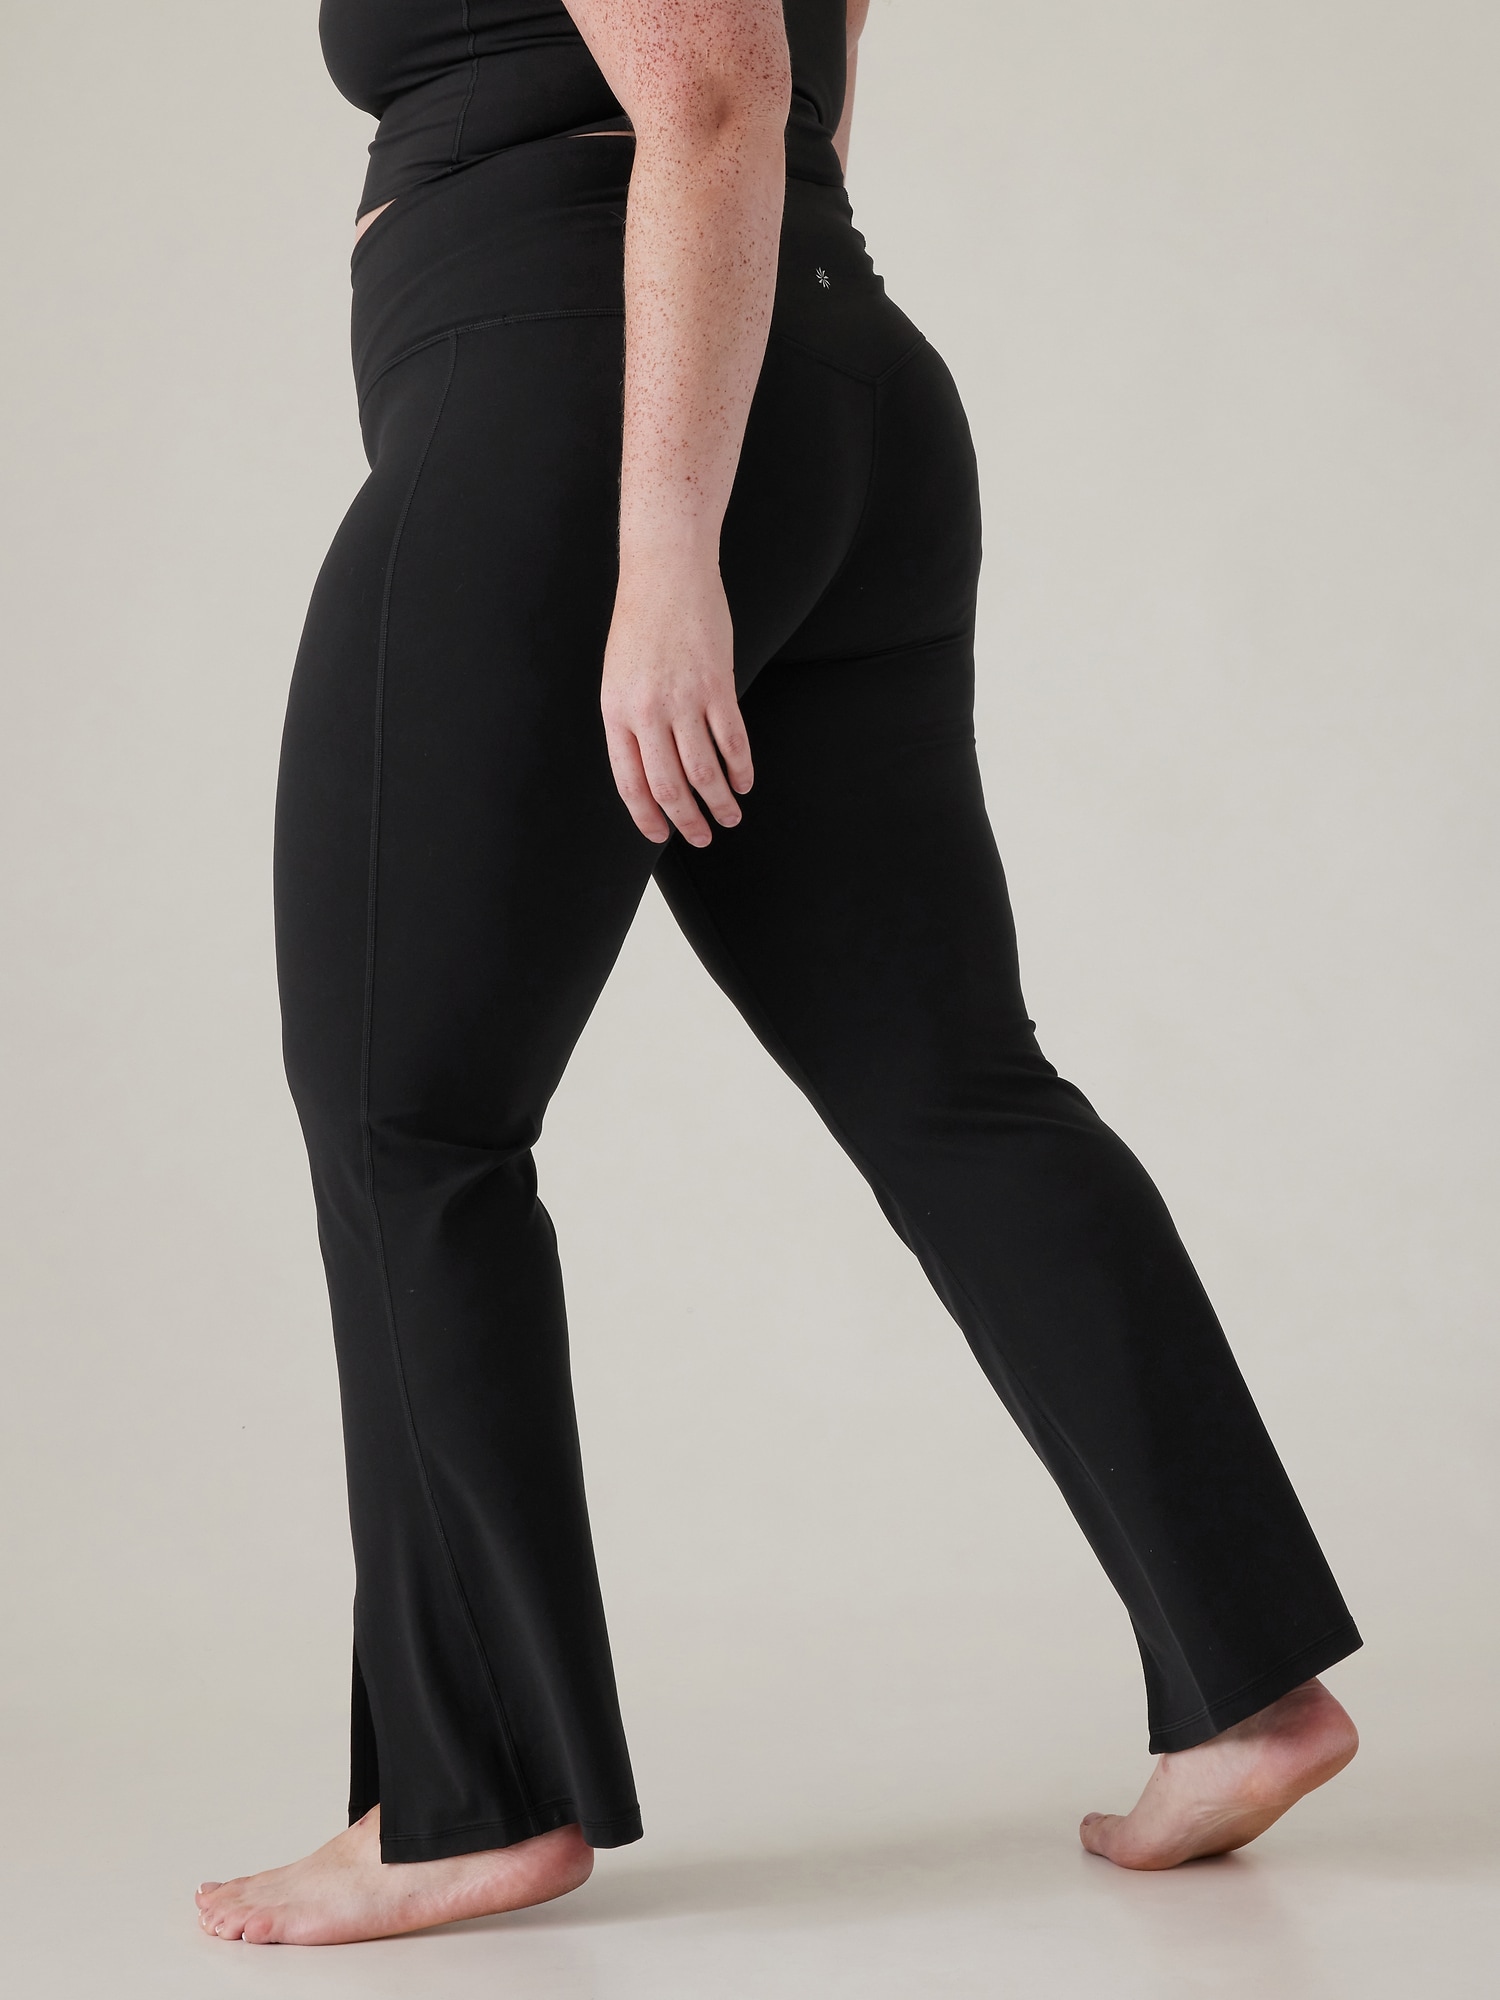 Womens Bootcut Yoga Pants with Pockets Moisture-Wicking High Waist